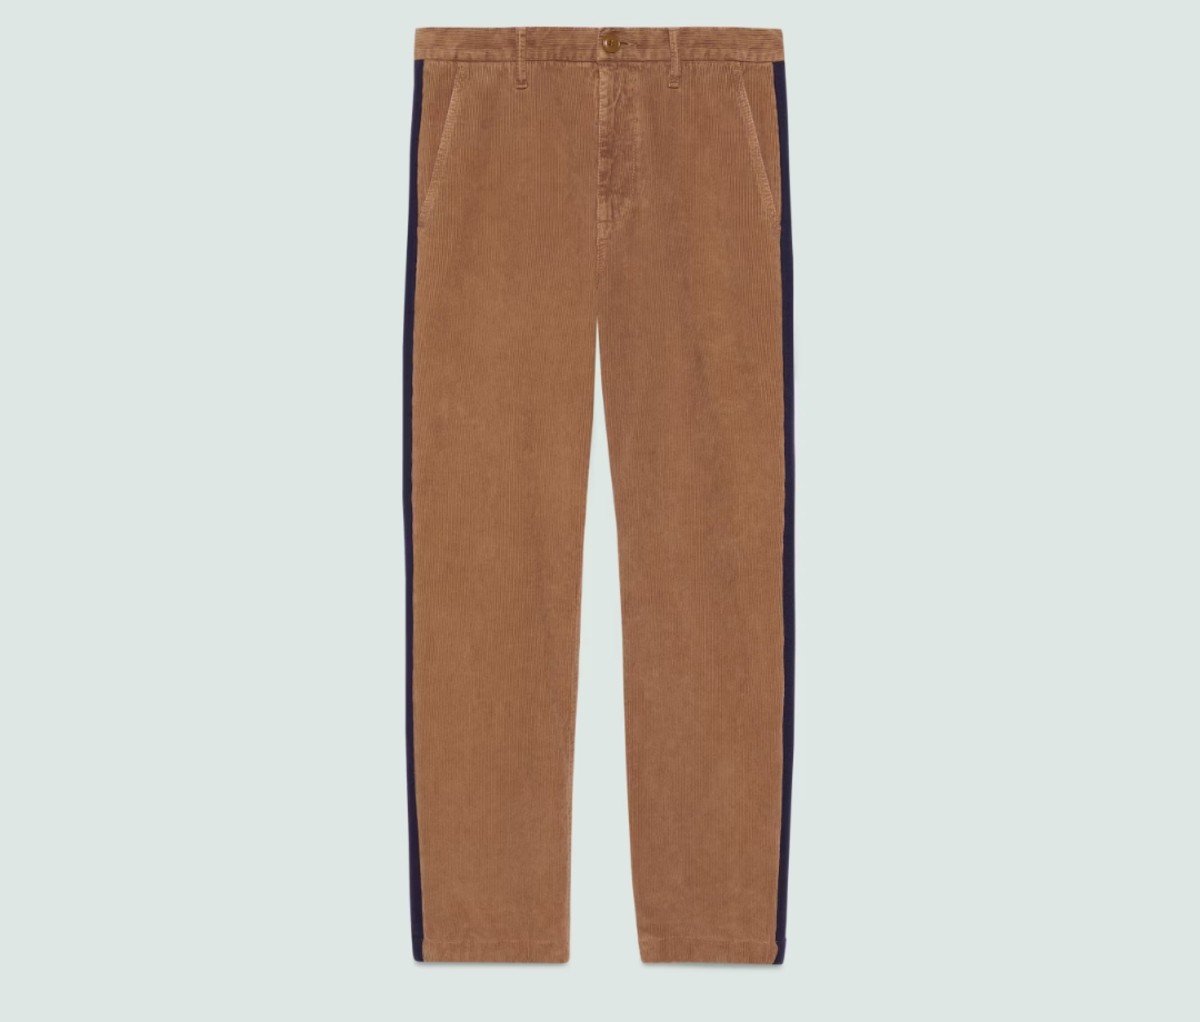 Vintage Mens Brown Corduroy Pants W35 Pleated Dress Pants / Slacks